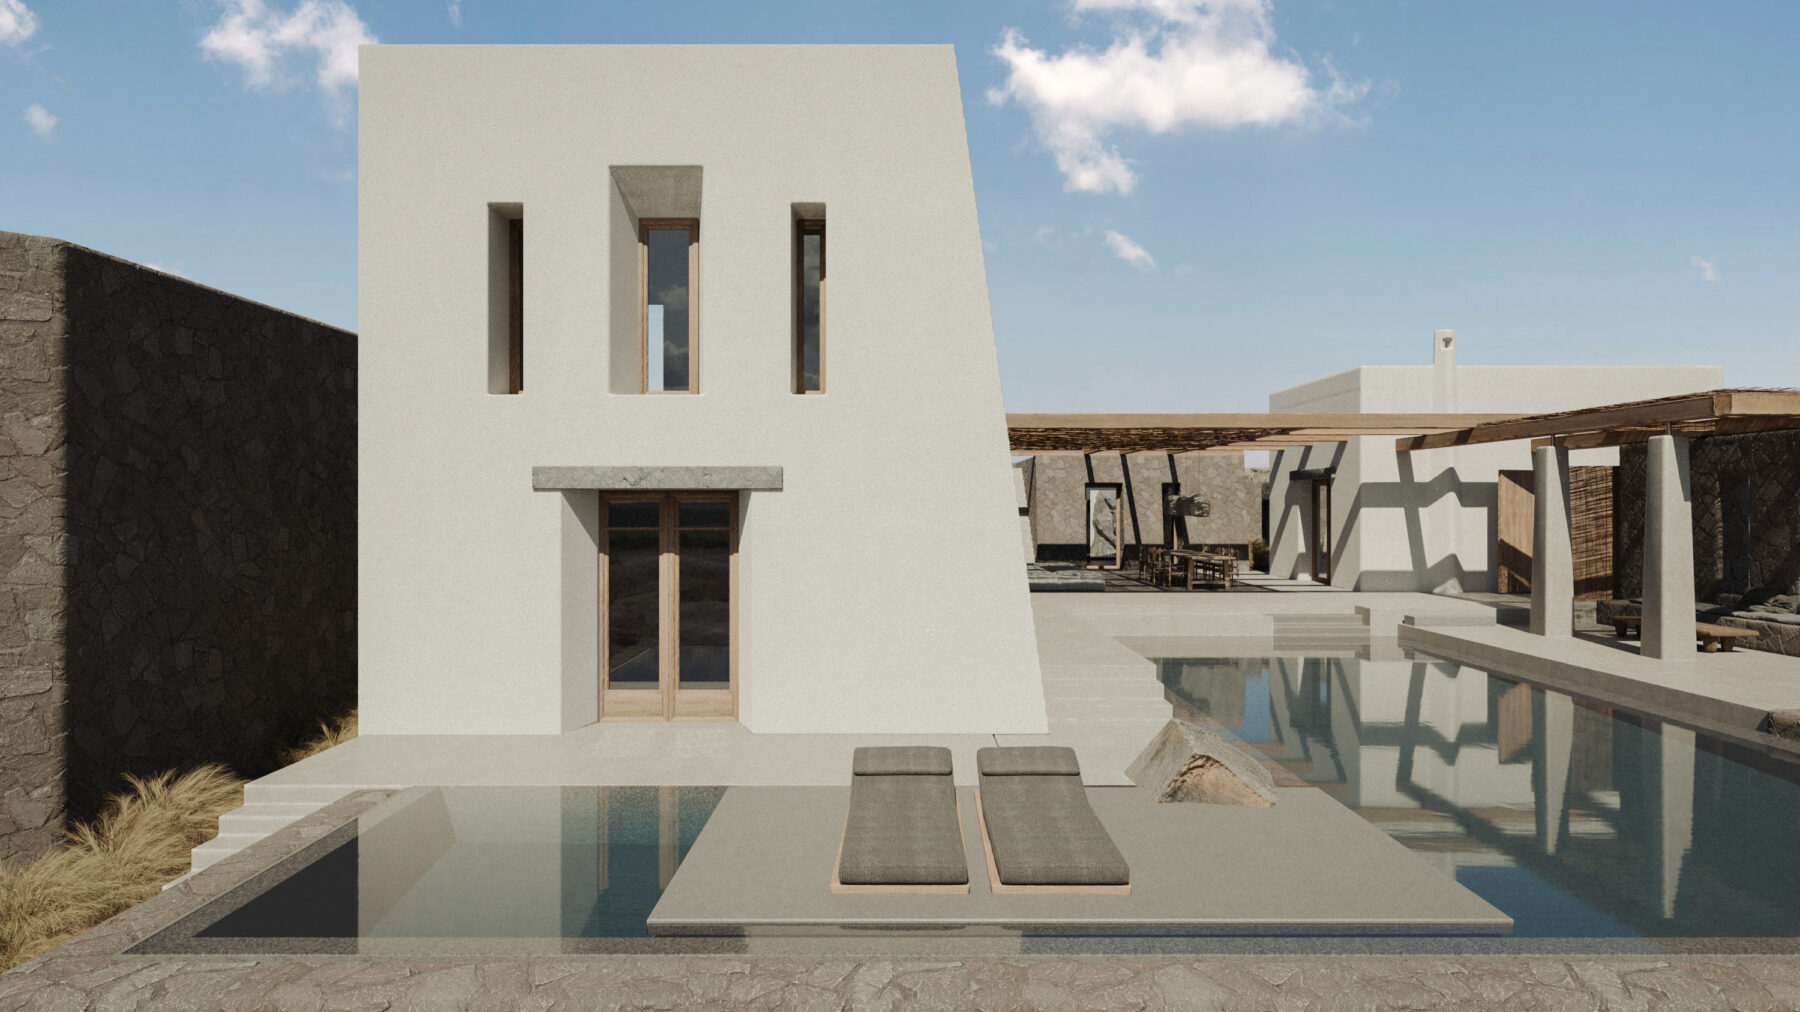 Archisearch Villa Juliette in Tourlos, Myconos island, Cyclades | Mado Samiou Architecture